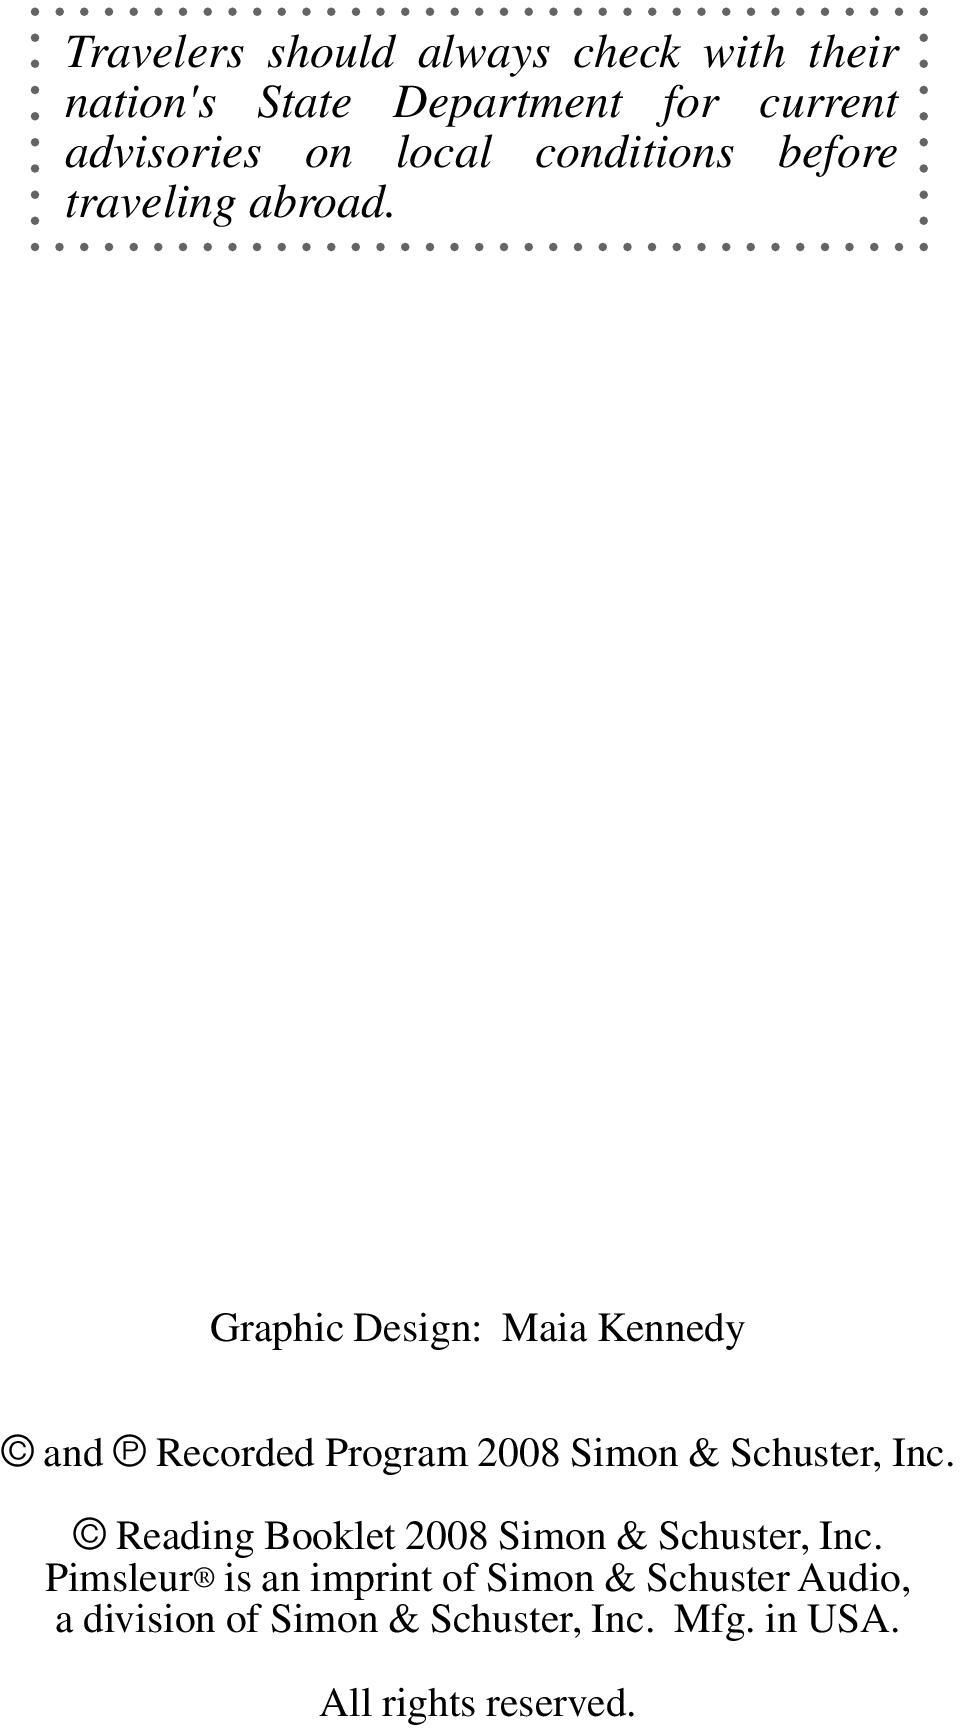 Graphic Design: Maia Kennedy and Recorded Program 2008 Simon & Schuster, Inc.